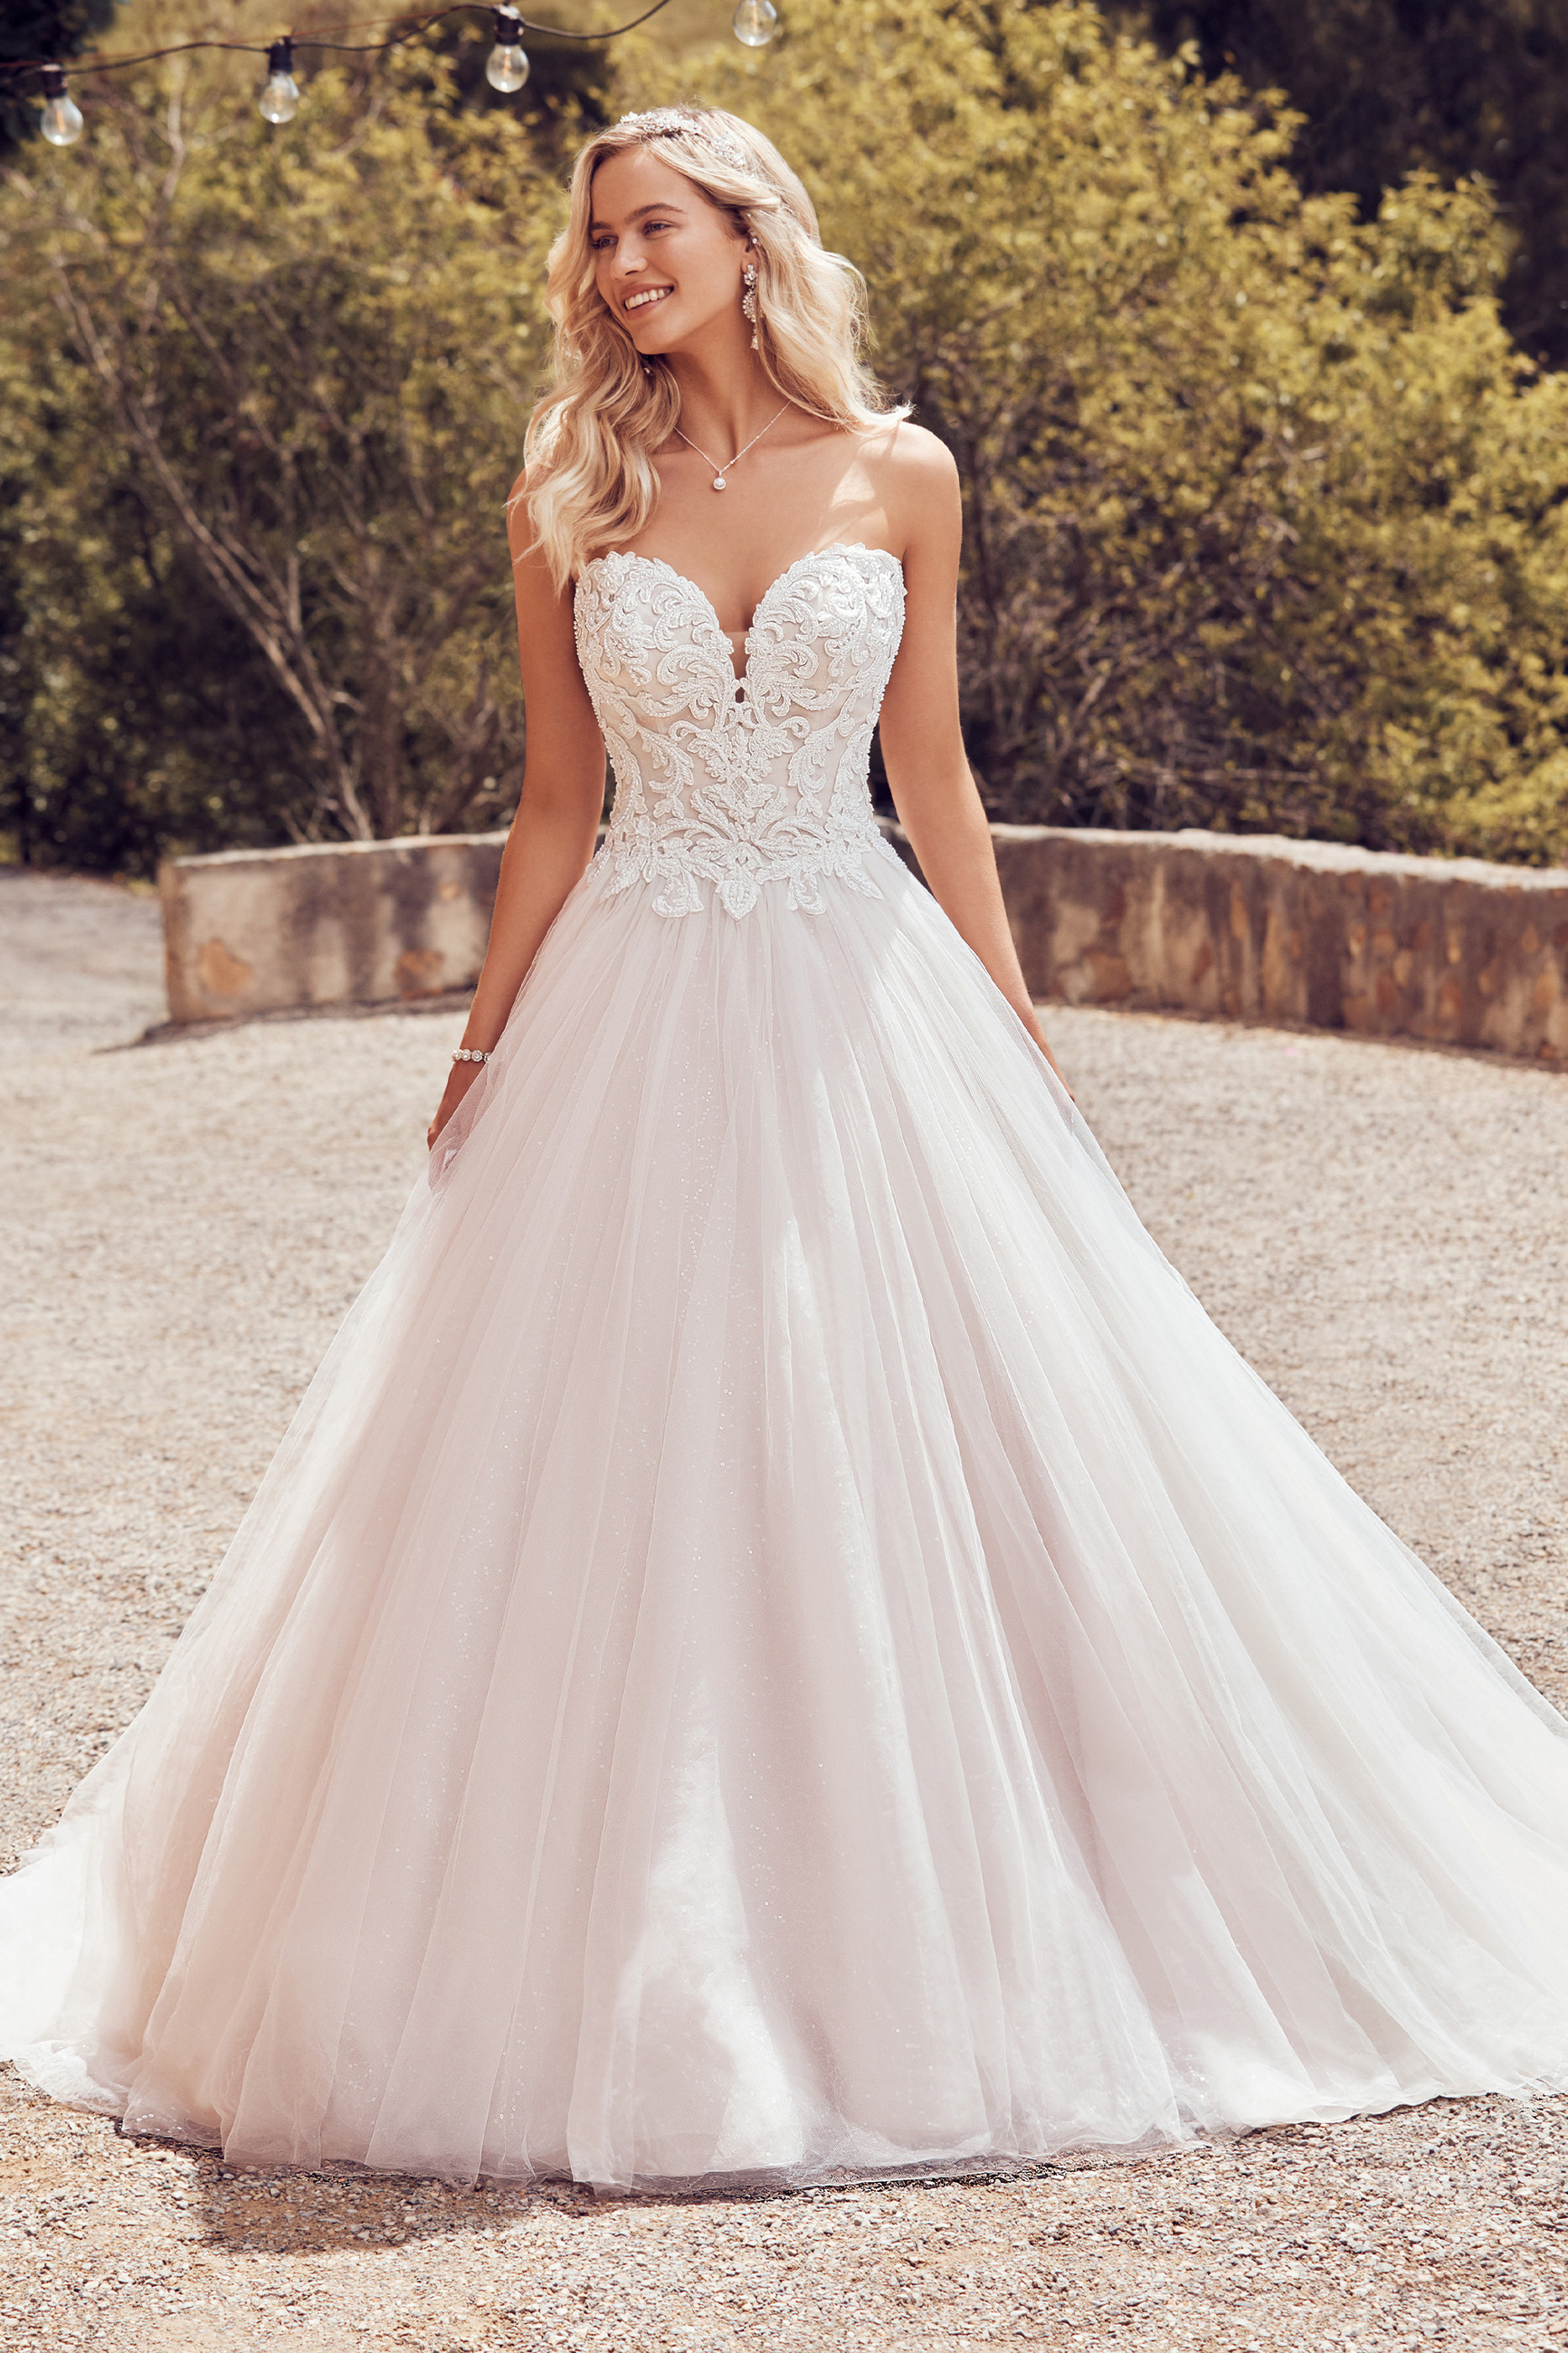 Sparkly Princess Wedding Dress with ...